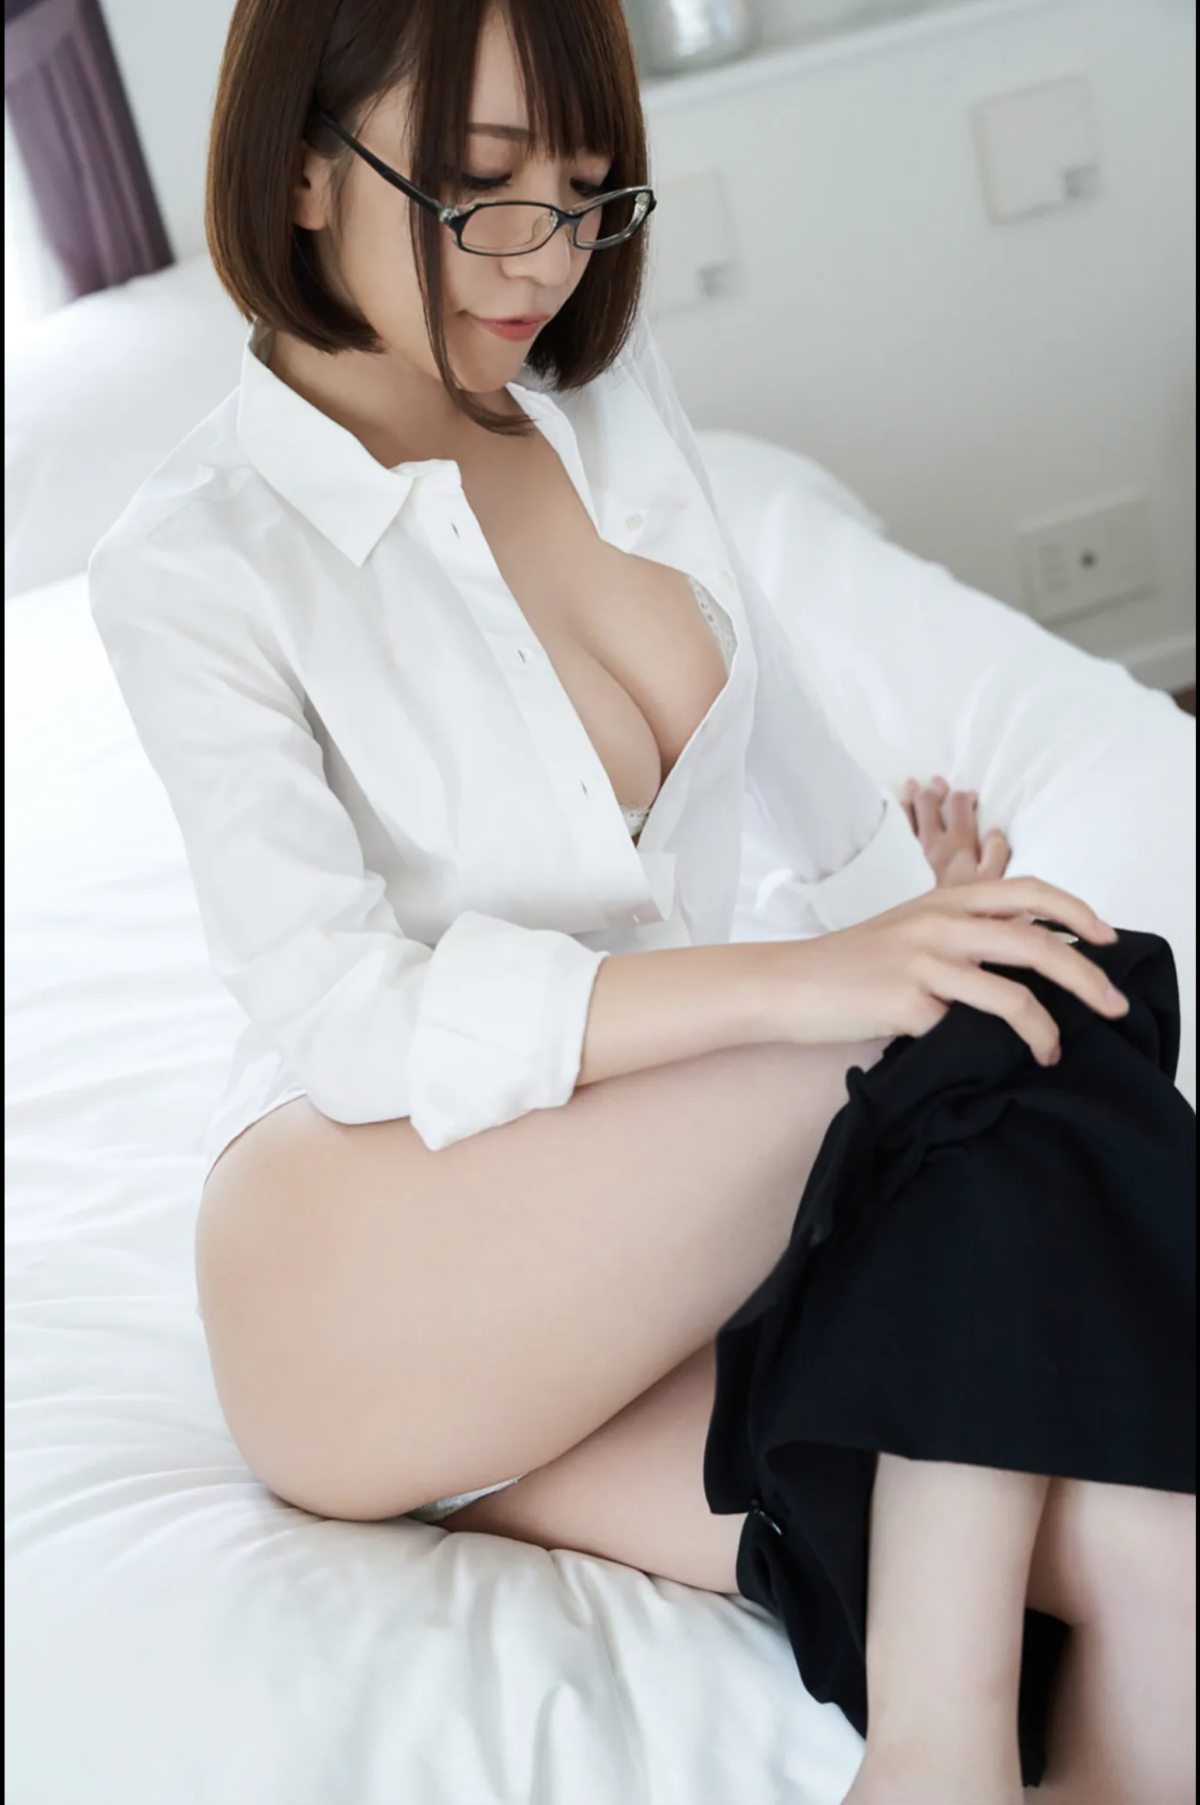 FRIDAY Digital Photobook Airi Shimizu 清水あいり Too erotic body Vol 2 エロすぎるカラダ Vol 2 2021 04 30 0011 8998997458.jpg